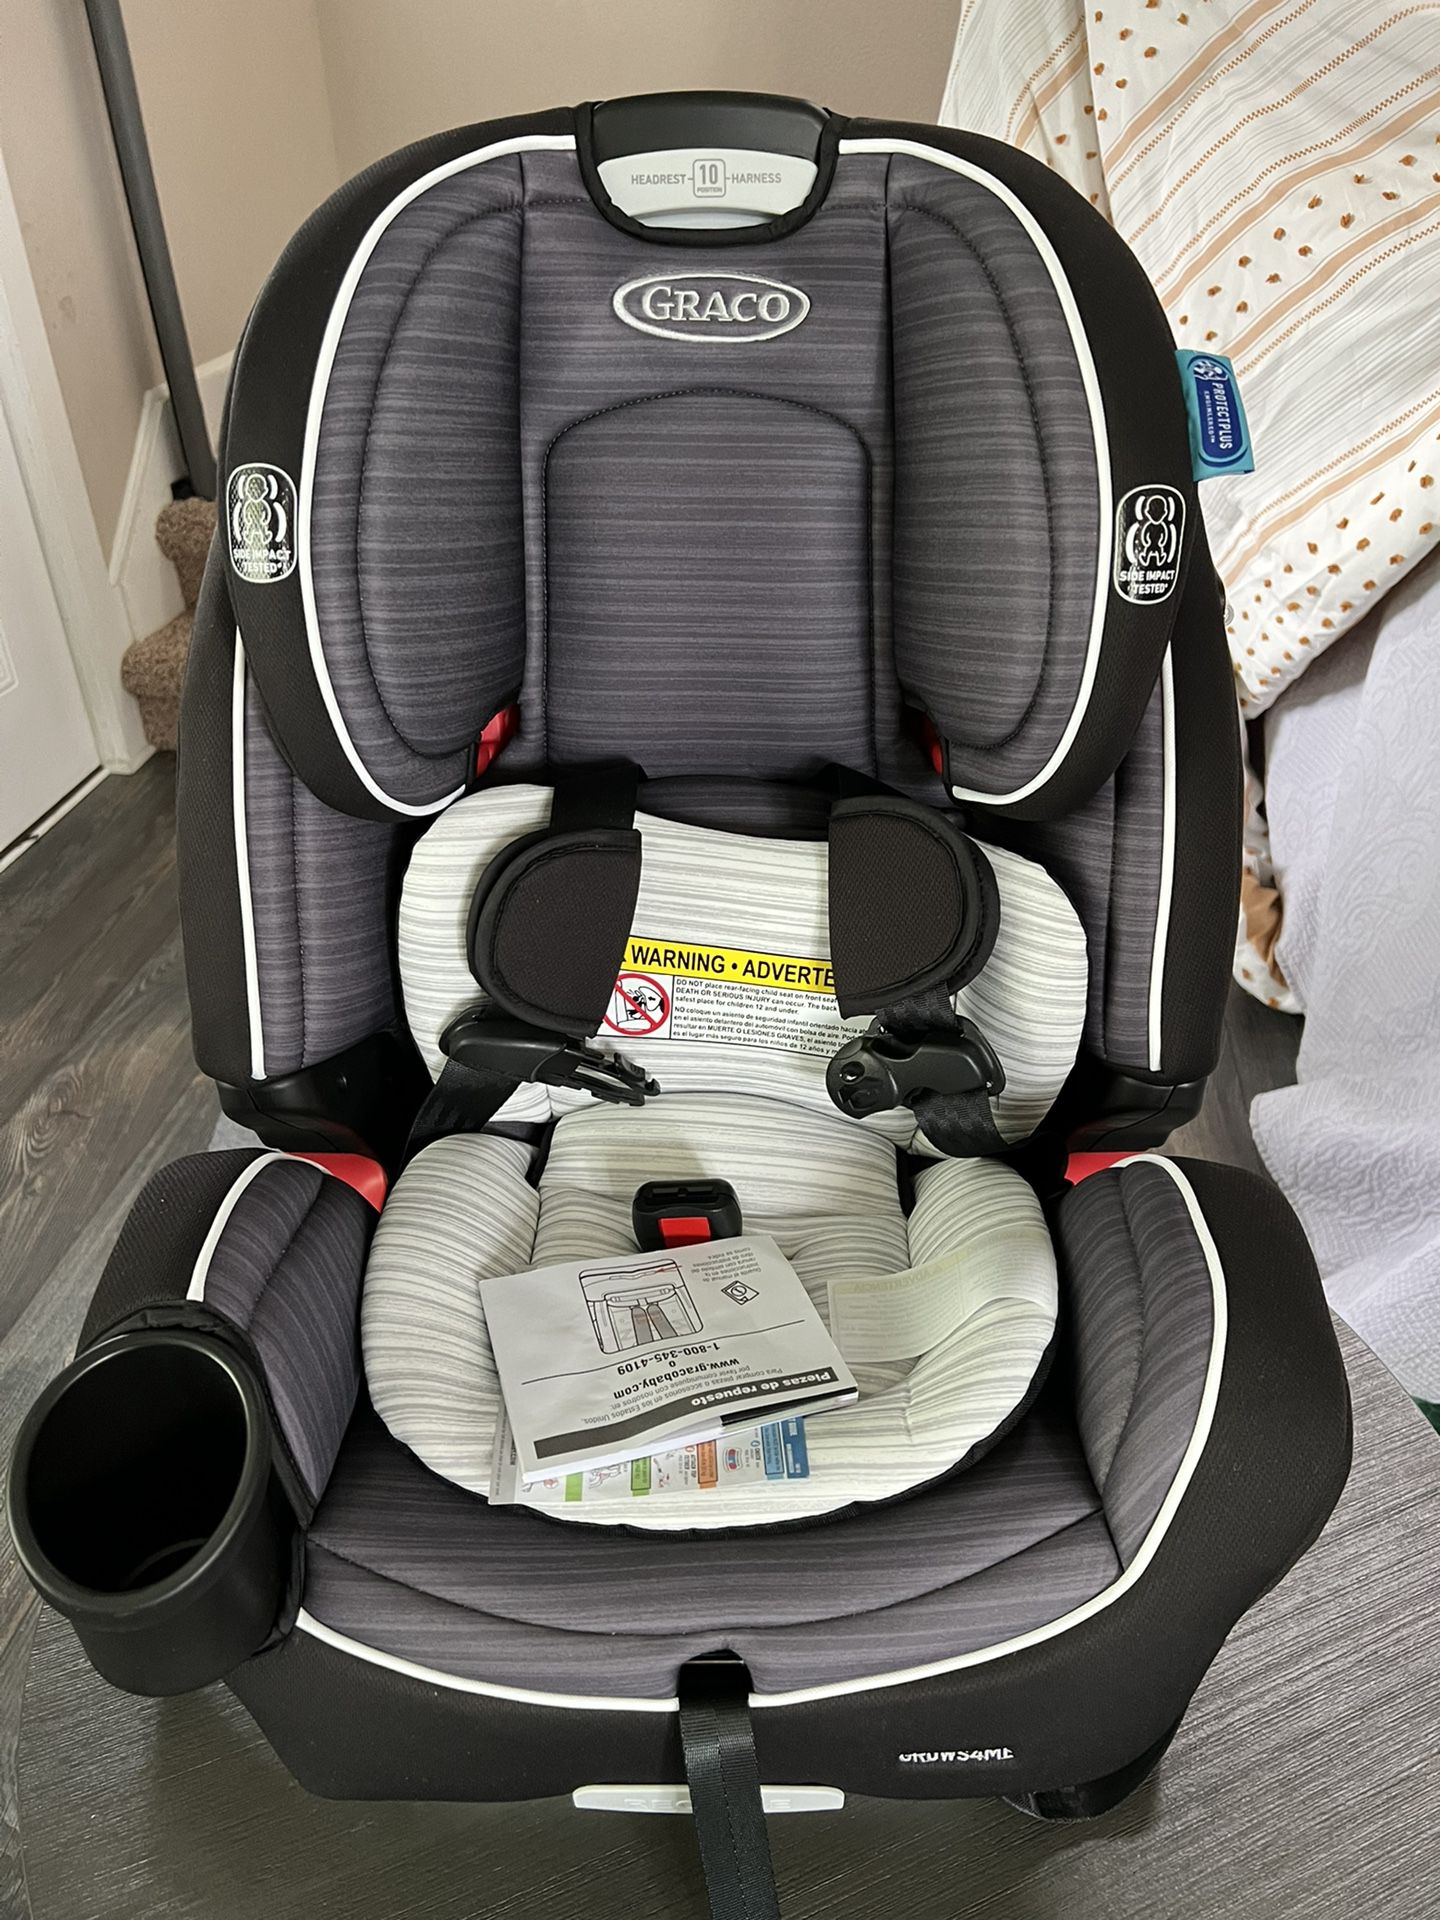 Graco grows4me 4-in-1 car seat (Newport Fashion)